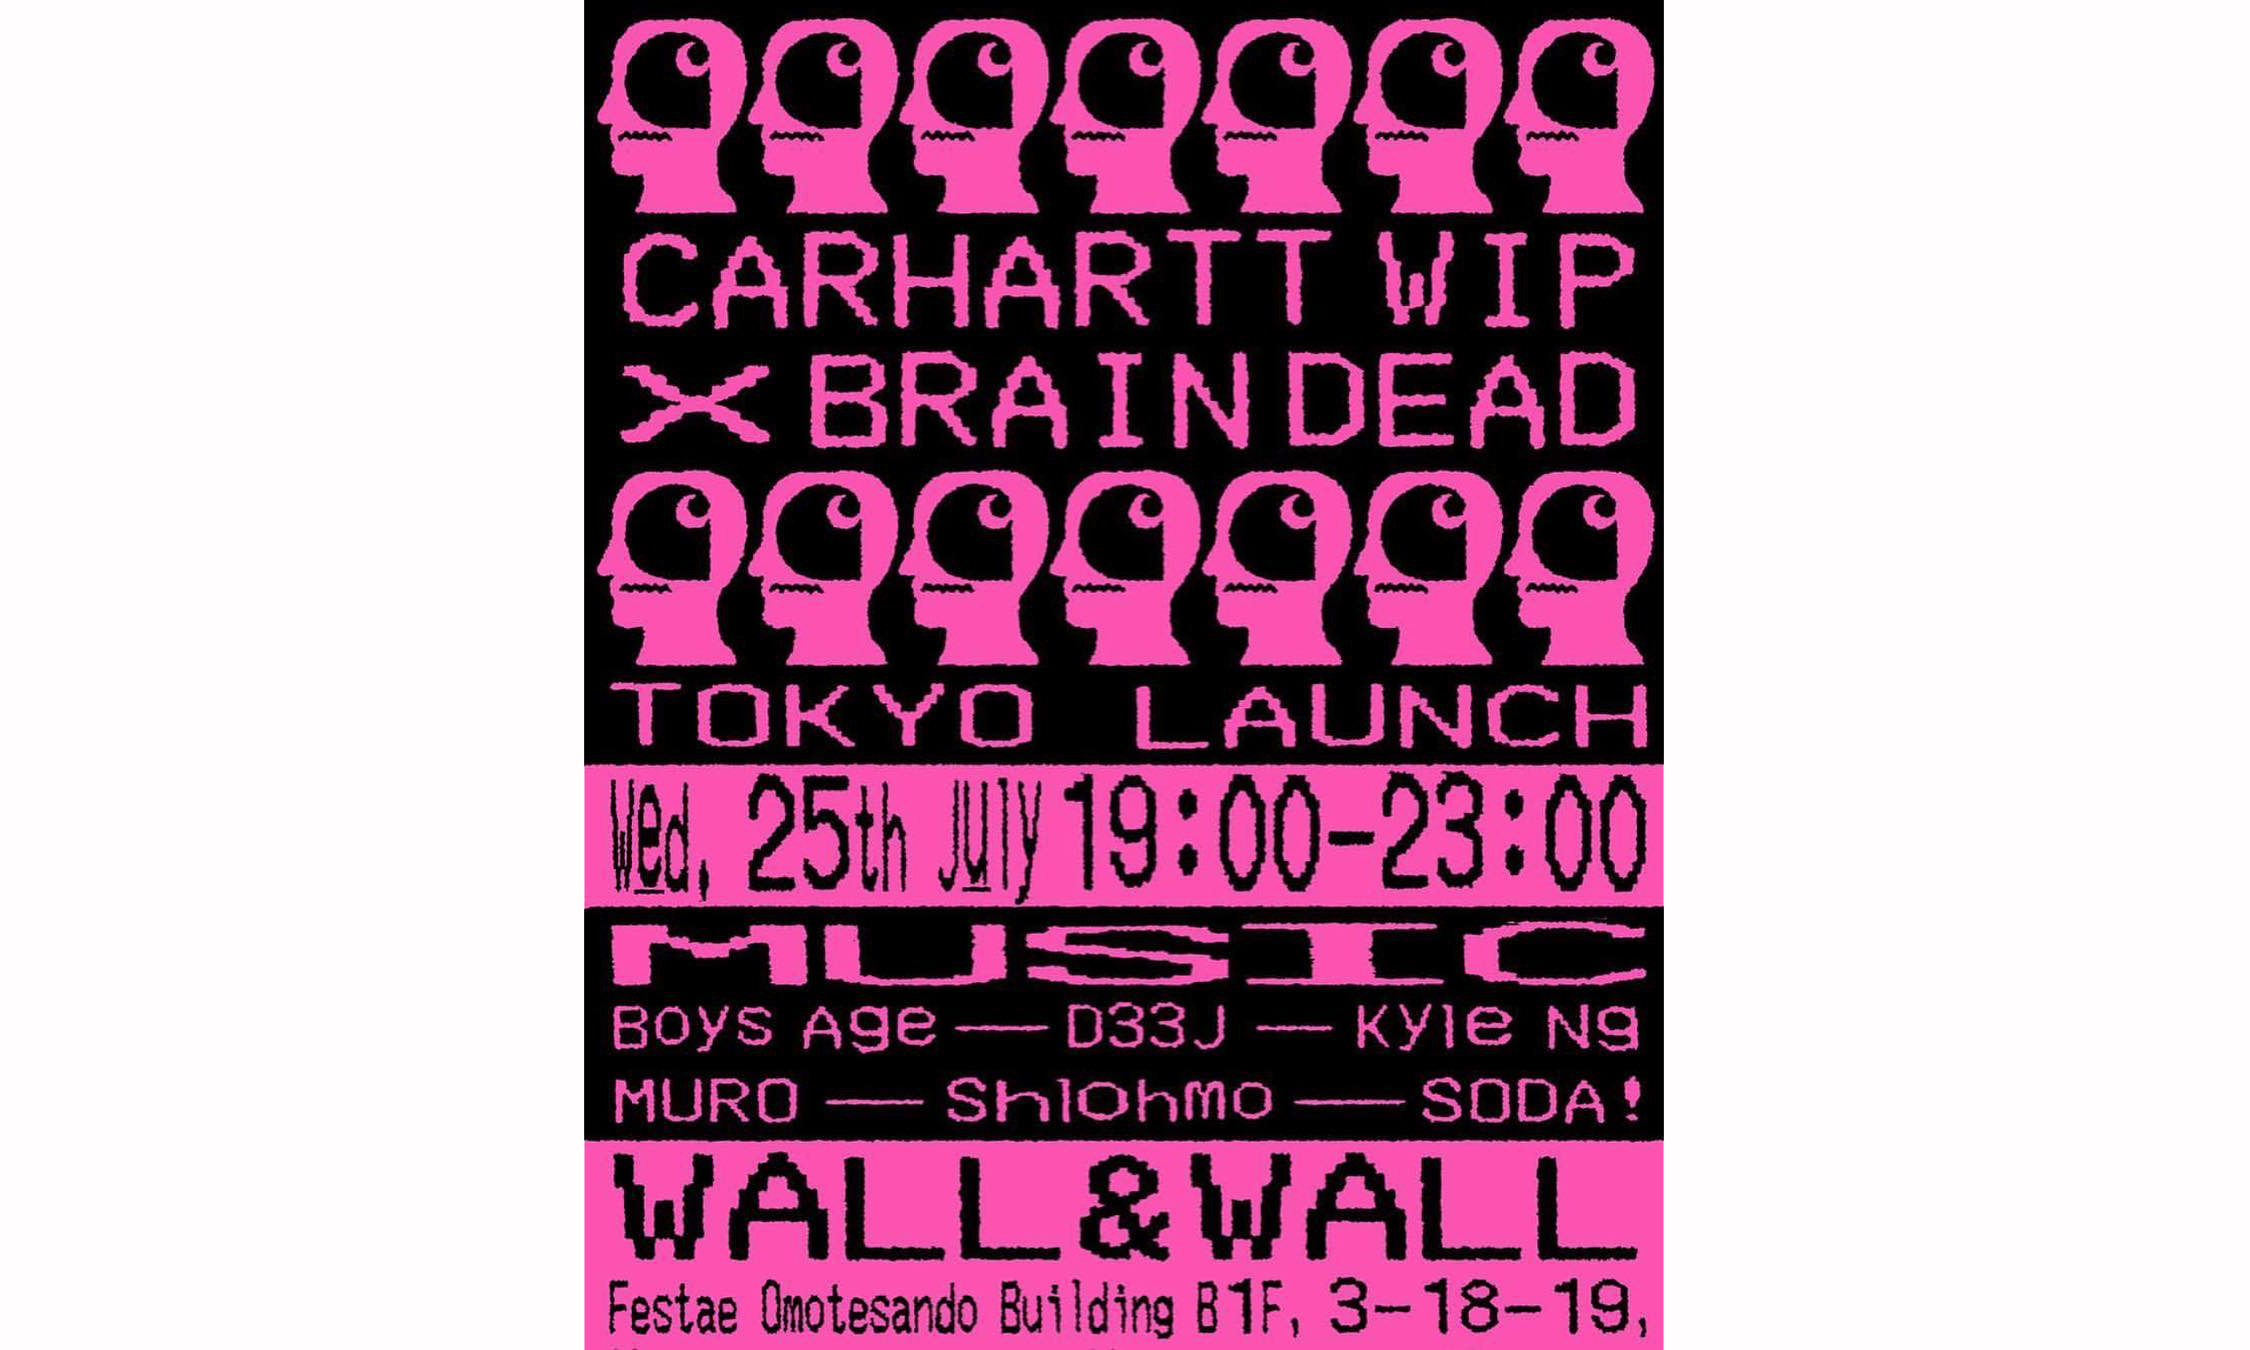 Carhartt WIP x BRAIN DEAD 揭幕音乐 Party 登陆东京